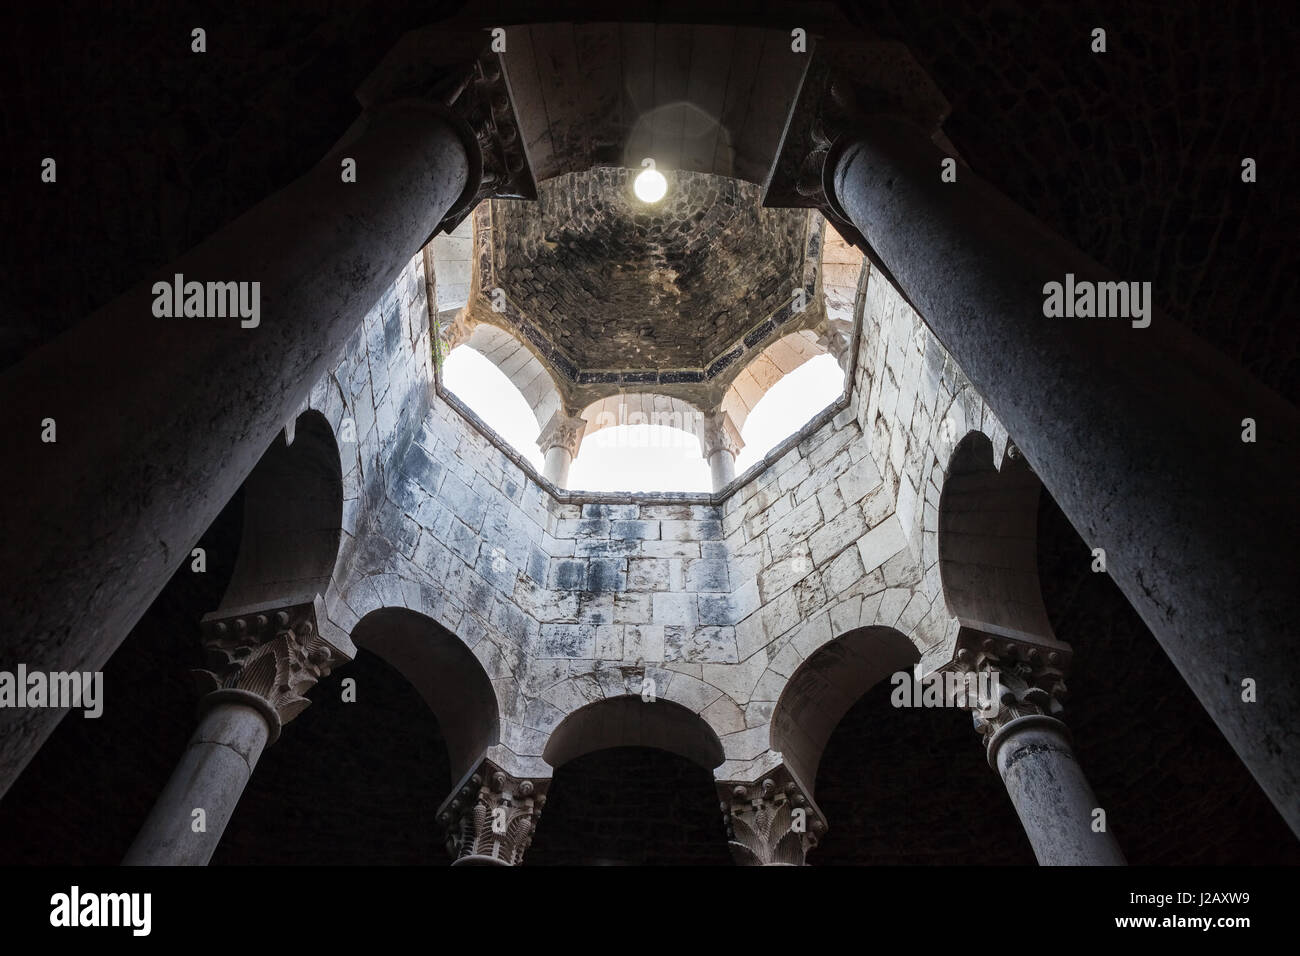 Arab Baths interior in Girona, Catalonia, Spain, daylighting cupola in Apodyterium room, Romanesque architecture Stock Photo